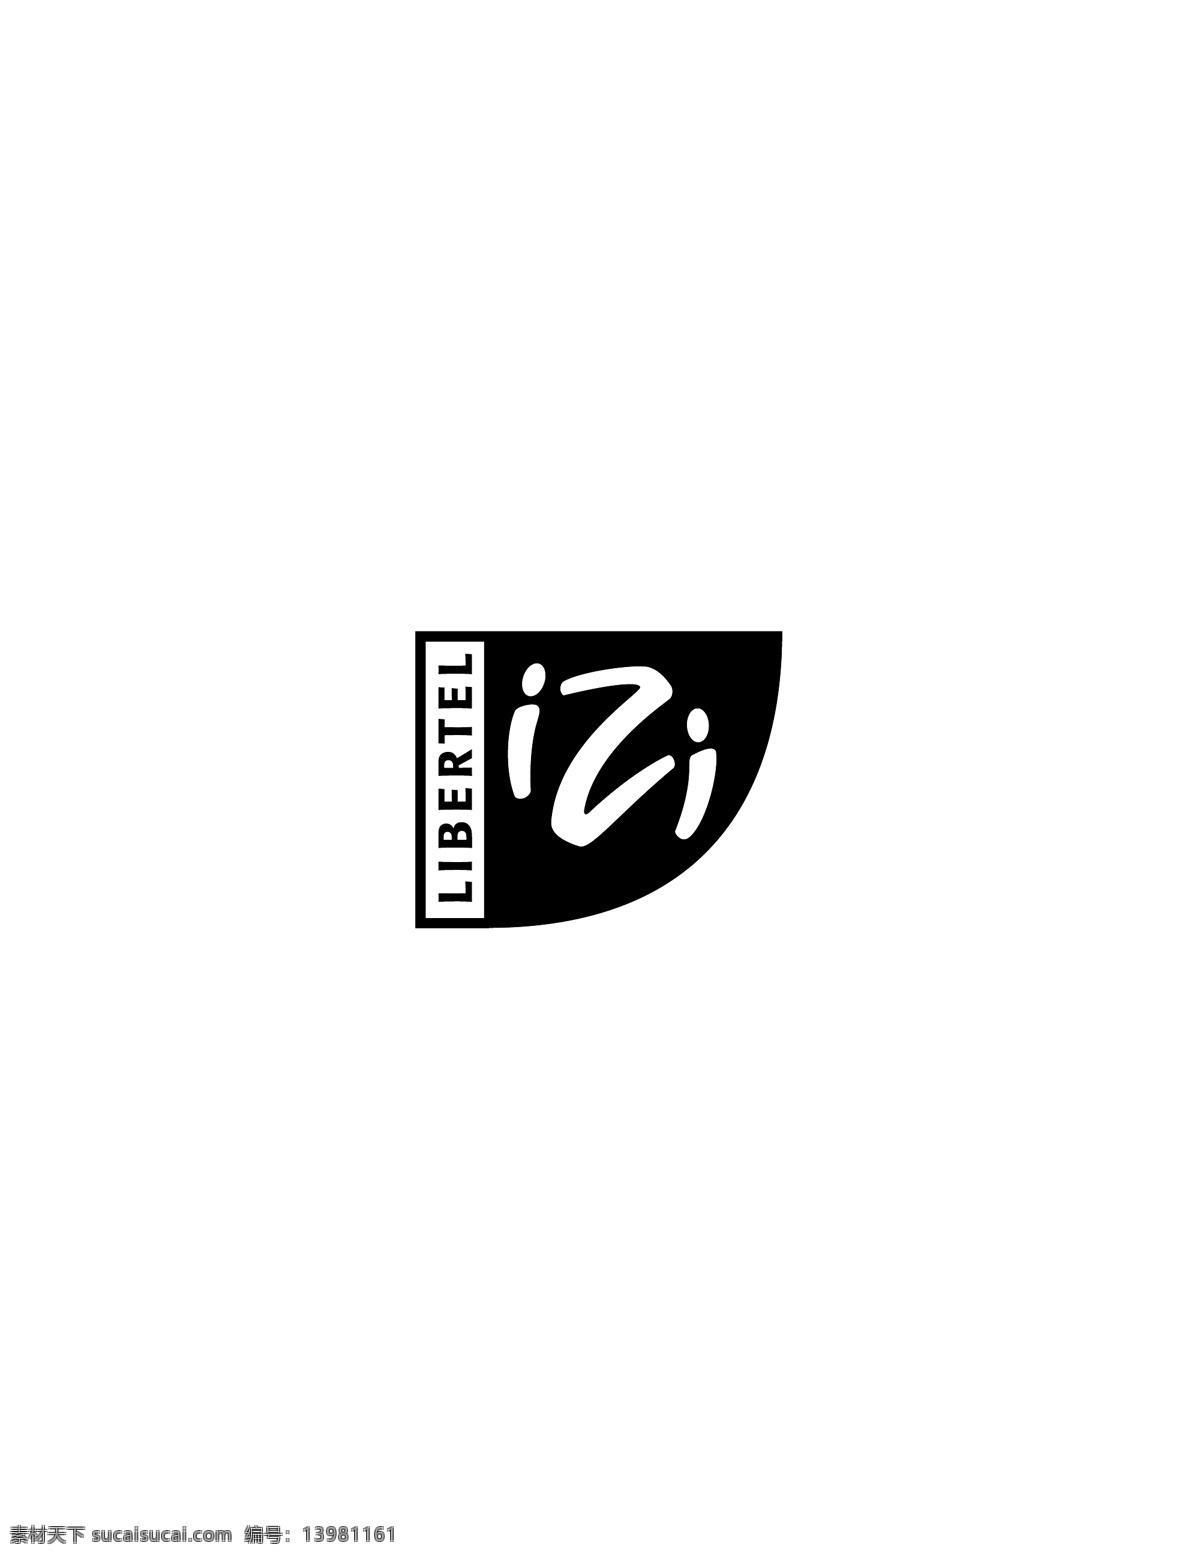 izi logo大全 logo 设计欣赏 商业矢量 矢量下载 libertel 传统 企业 标志设计 欣赏 网页矢量 矢量图 其他矢量图